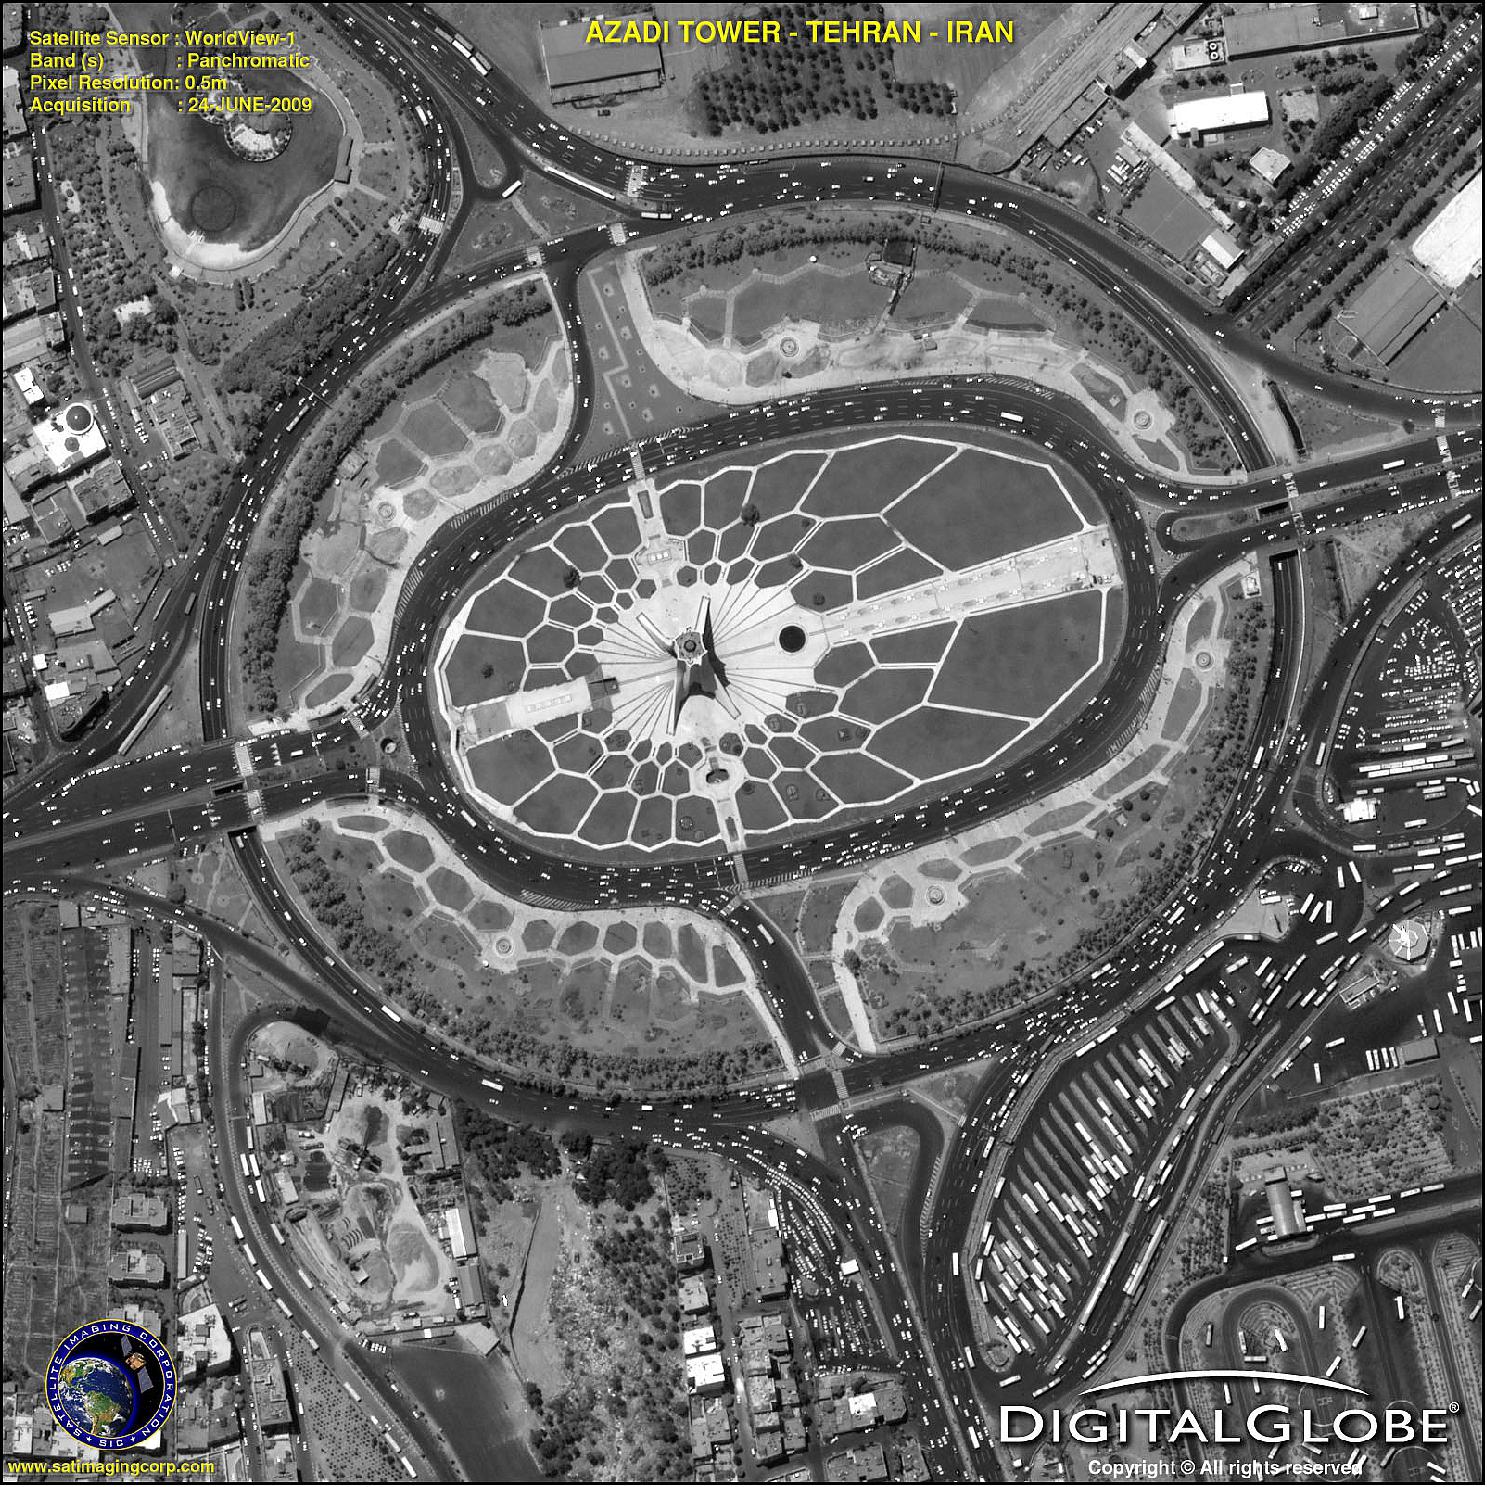 Figure 7: WorldView-1 panchromatic image of the Azadi Tower in Teheran, Iran, acquired on June 24, 2009 (image credit, DigitalGlobe, Satellite Imaging Corp.) 17)